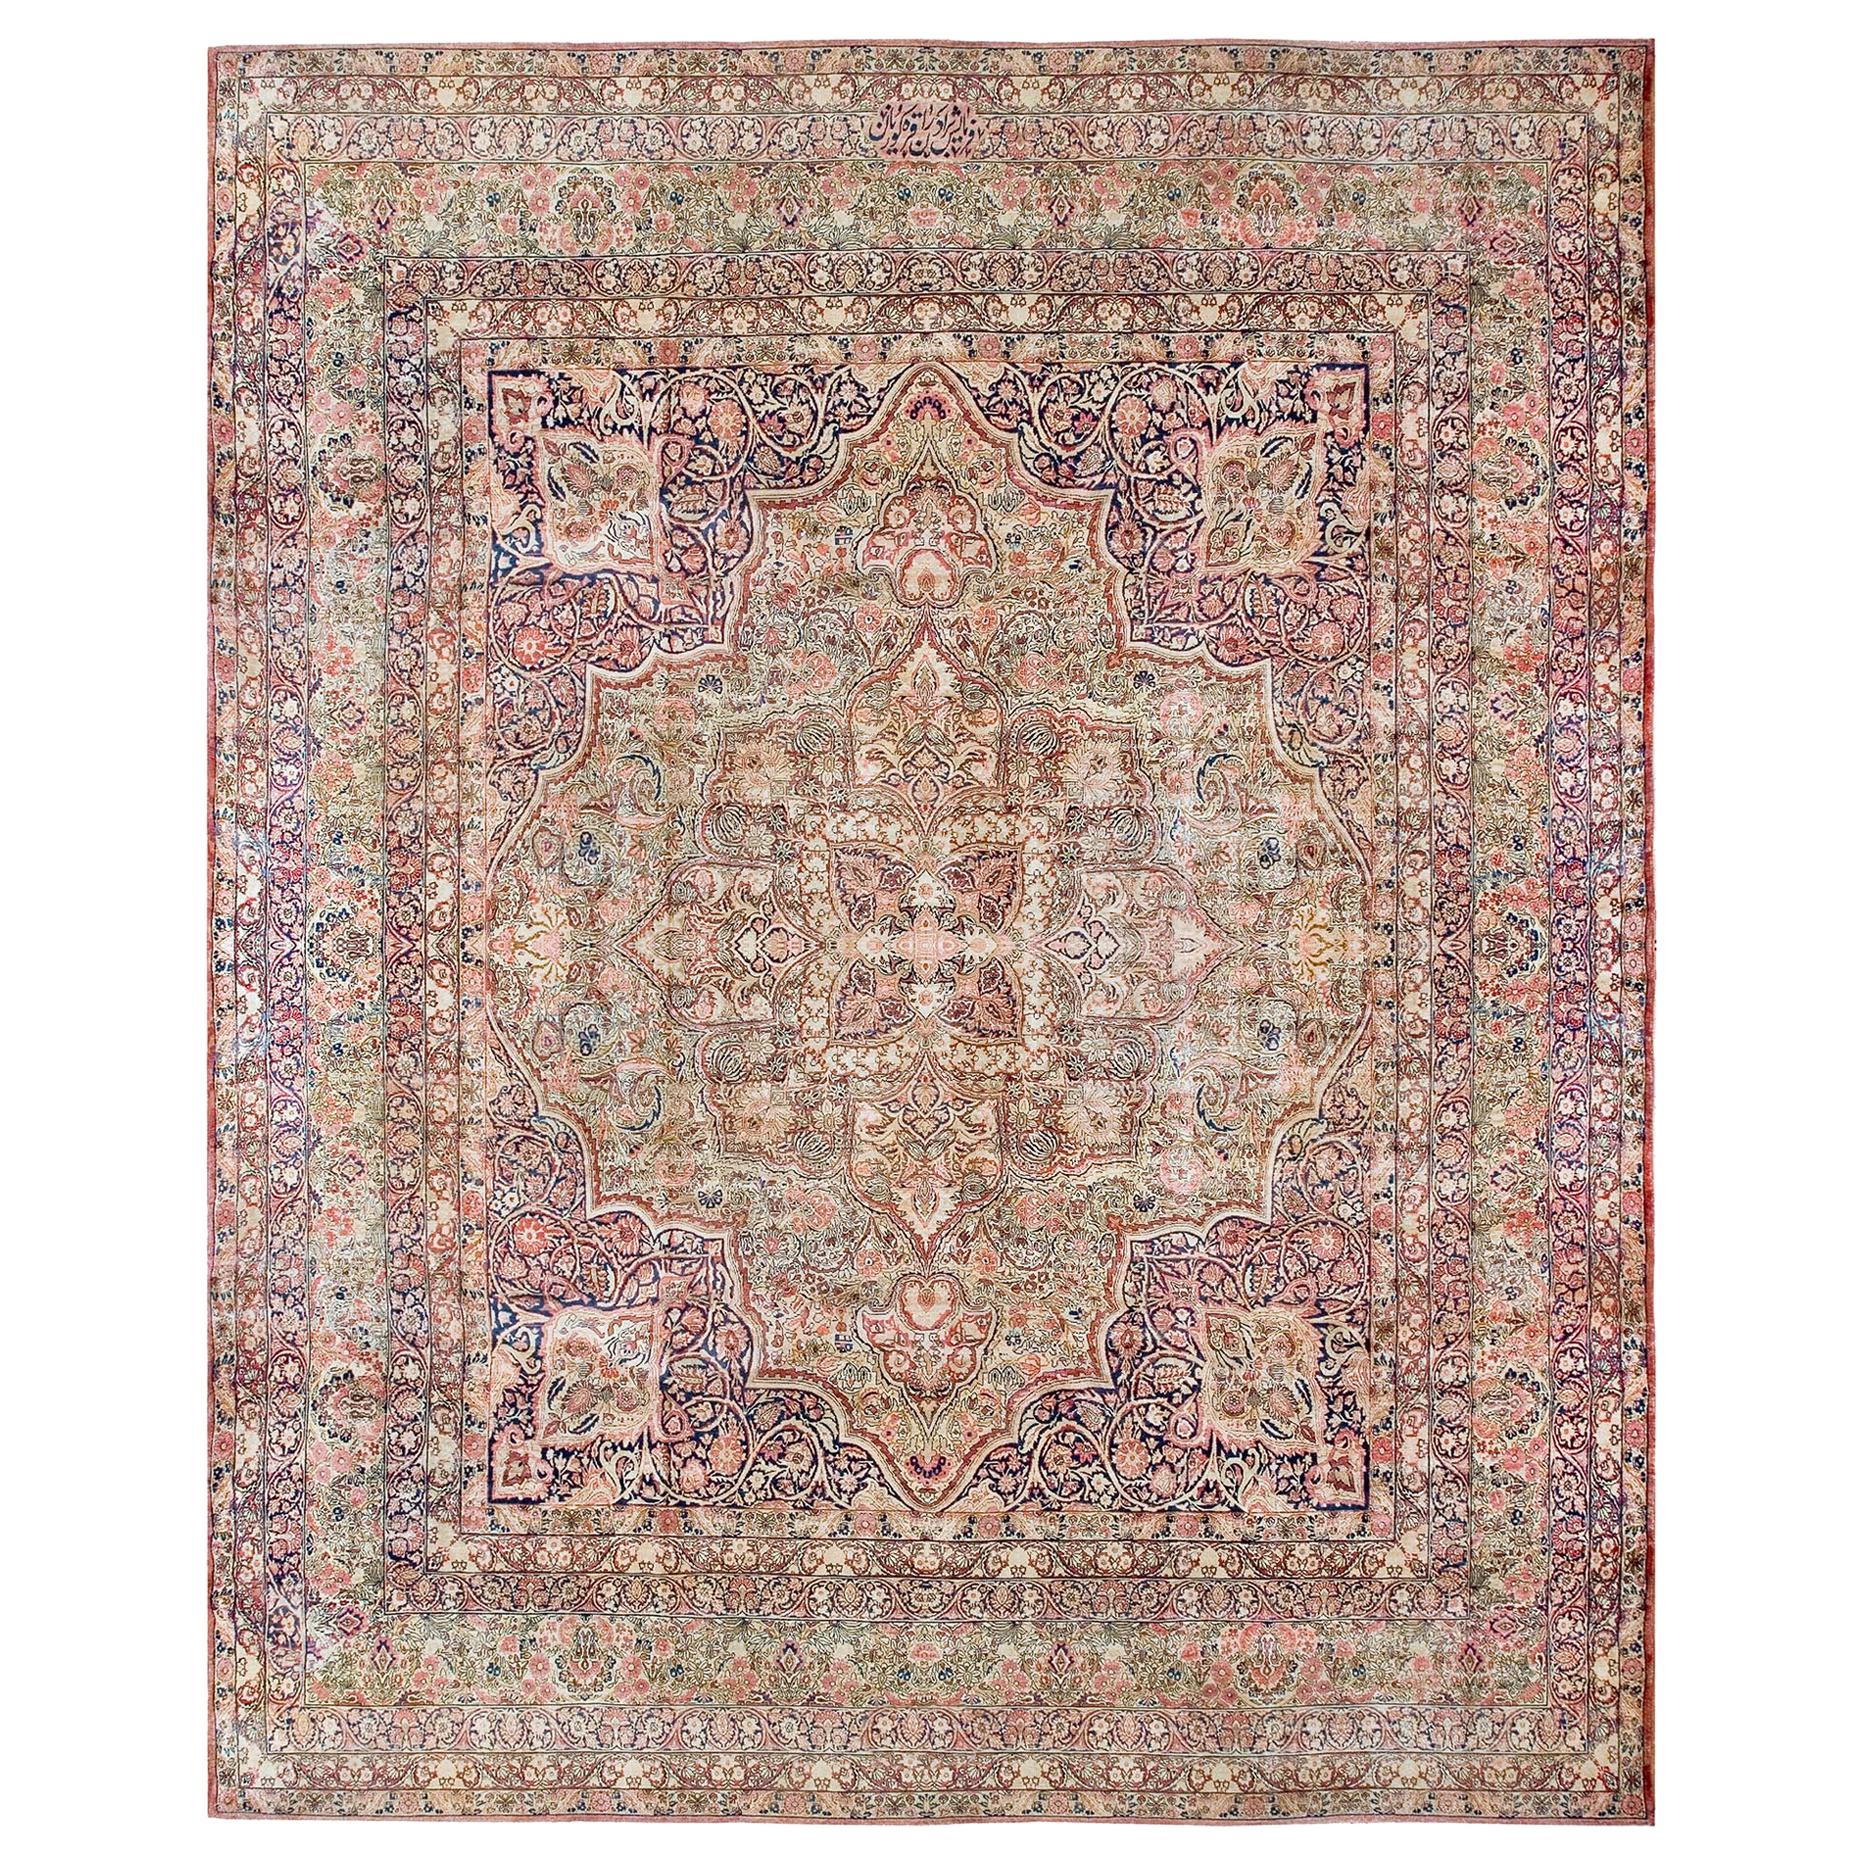 Late 19th Century Persian Laver Kerman Carpet ( 14' x 17' - 427 x 518 cm ) 